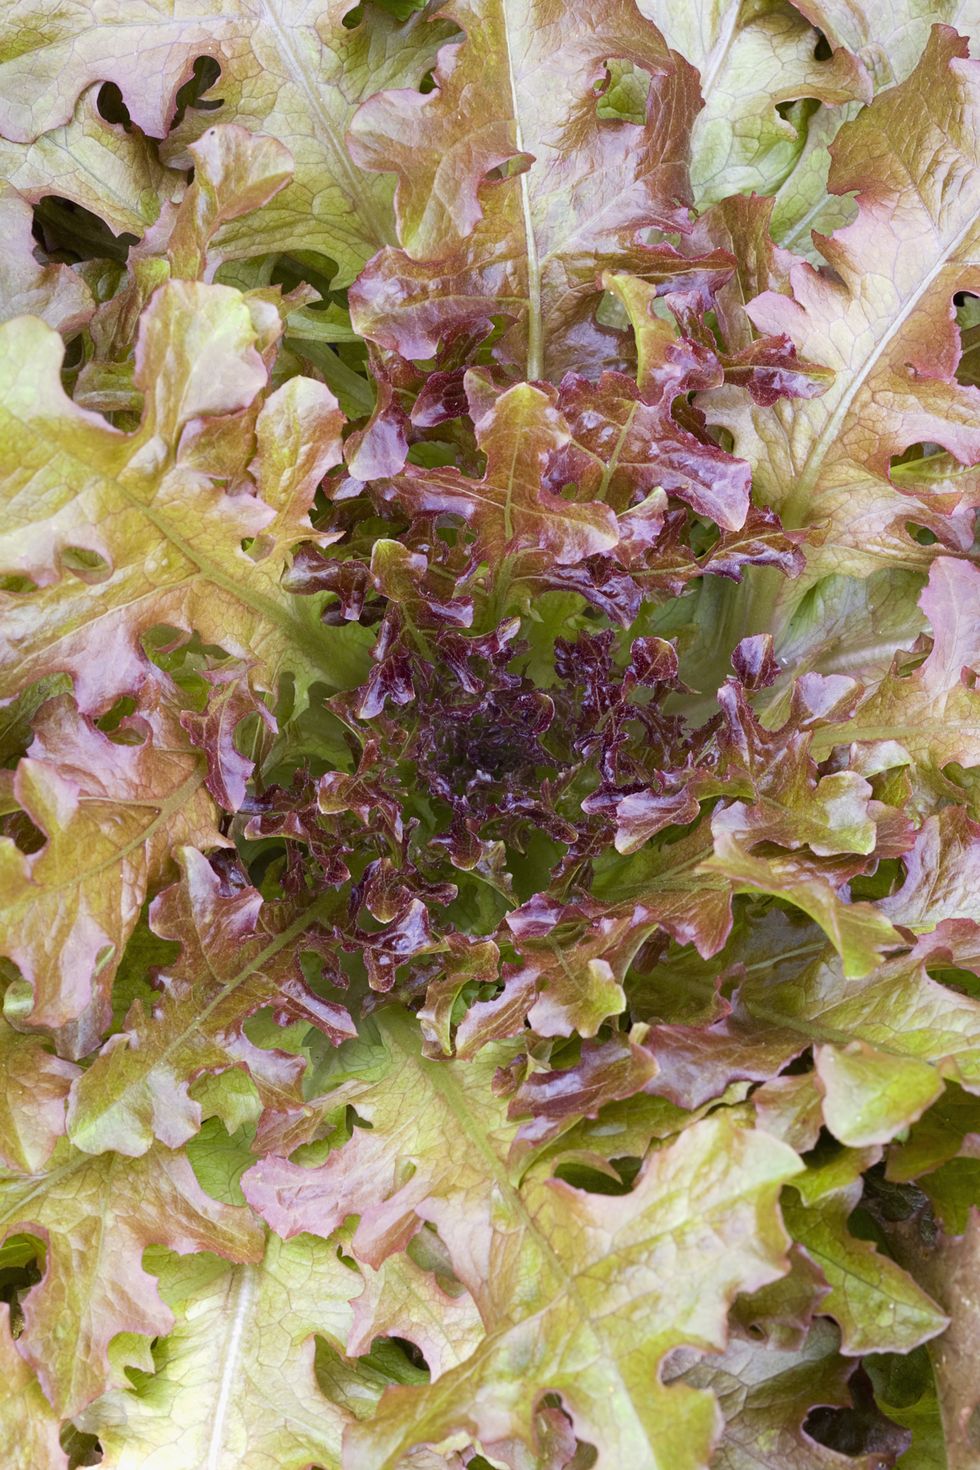 https://hips.hearstapps.com/hmg-prod/images/types-of-lettuce-oakleaf-1586468591.jpg?crop=0.9962335216572505xw:1xh;center,top&resize=980:*